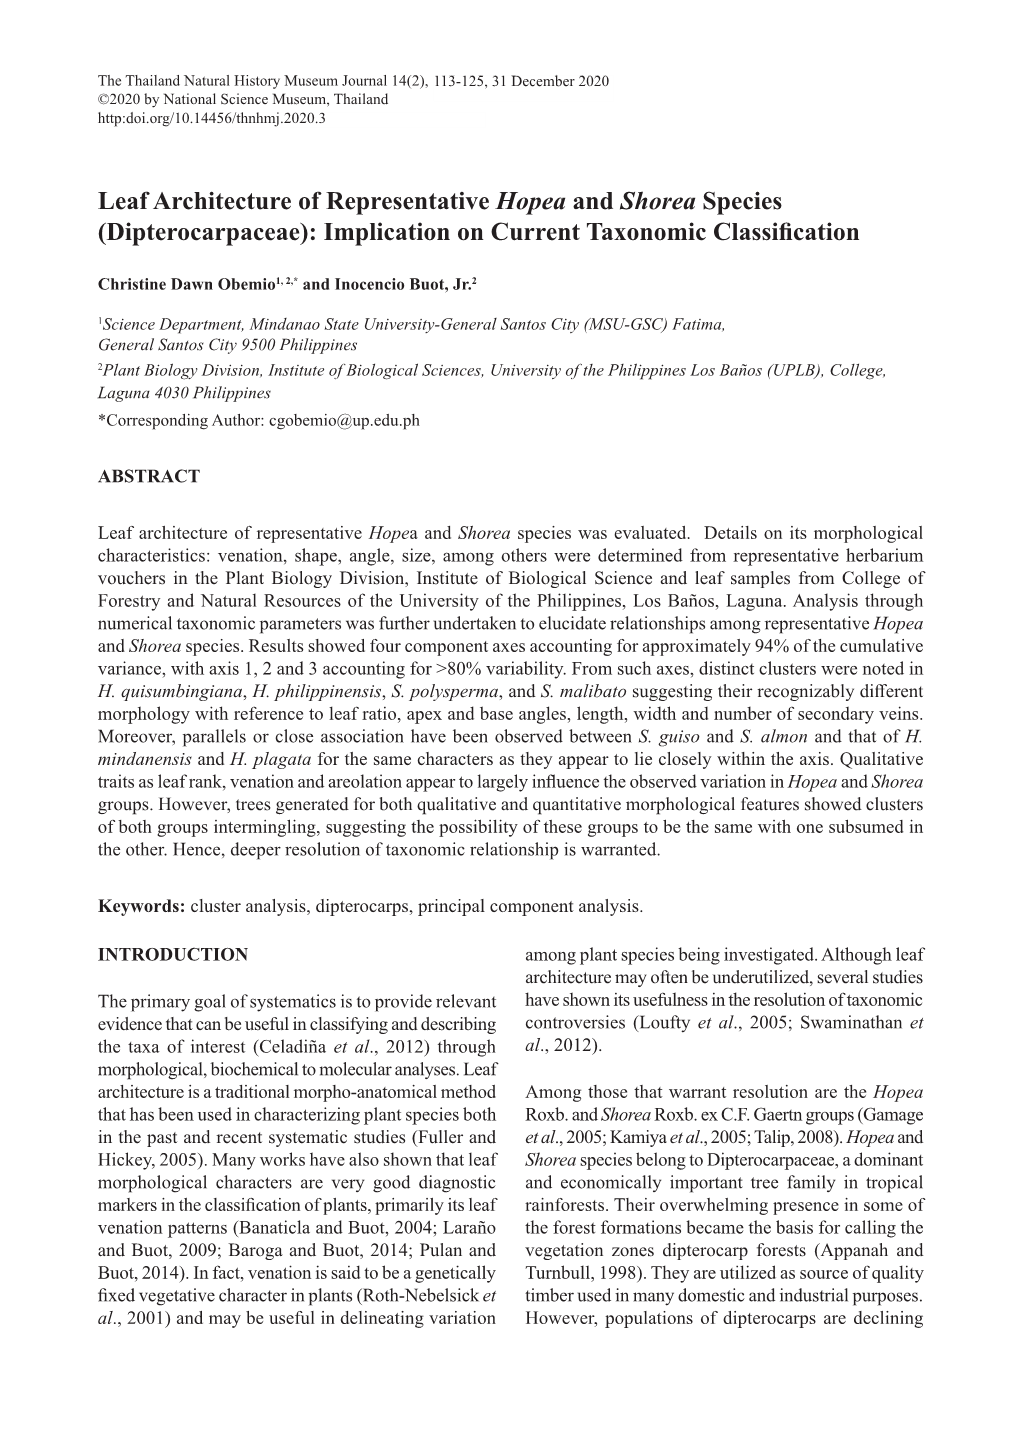 Leaf Architecture of Representative Hopea and Shorea Species (Dipterocarpaceae): Implication on Current Taxonomic Classification